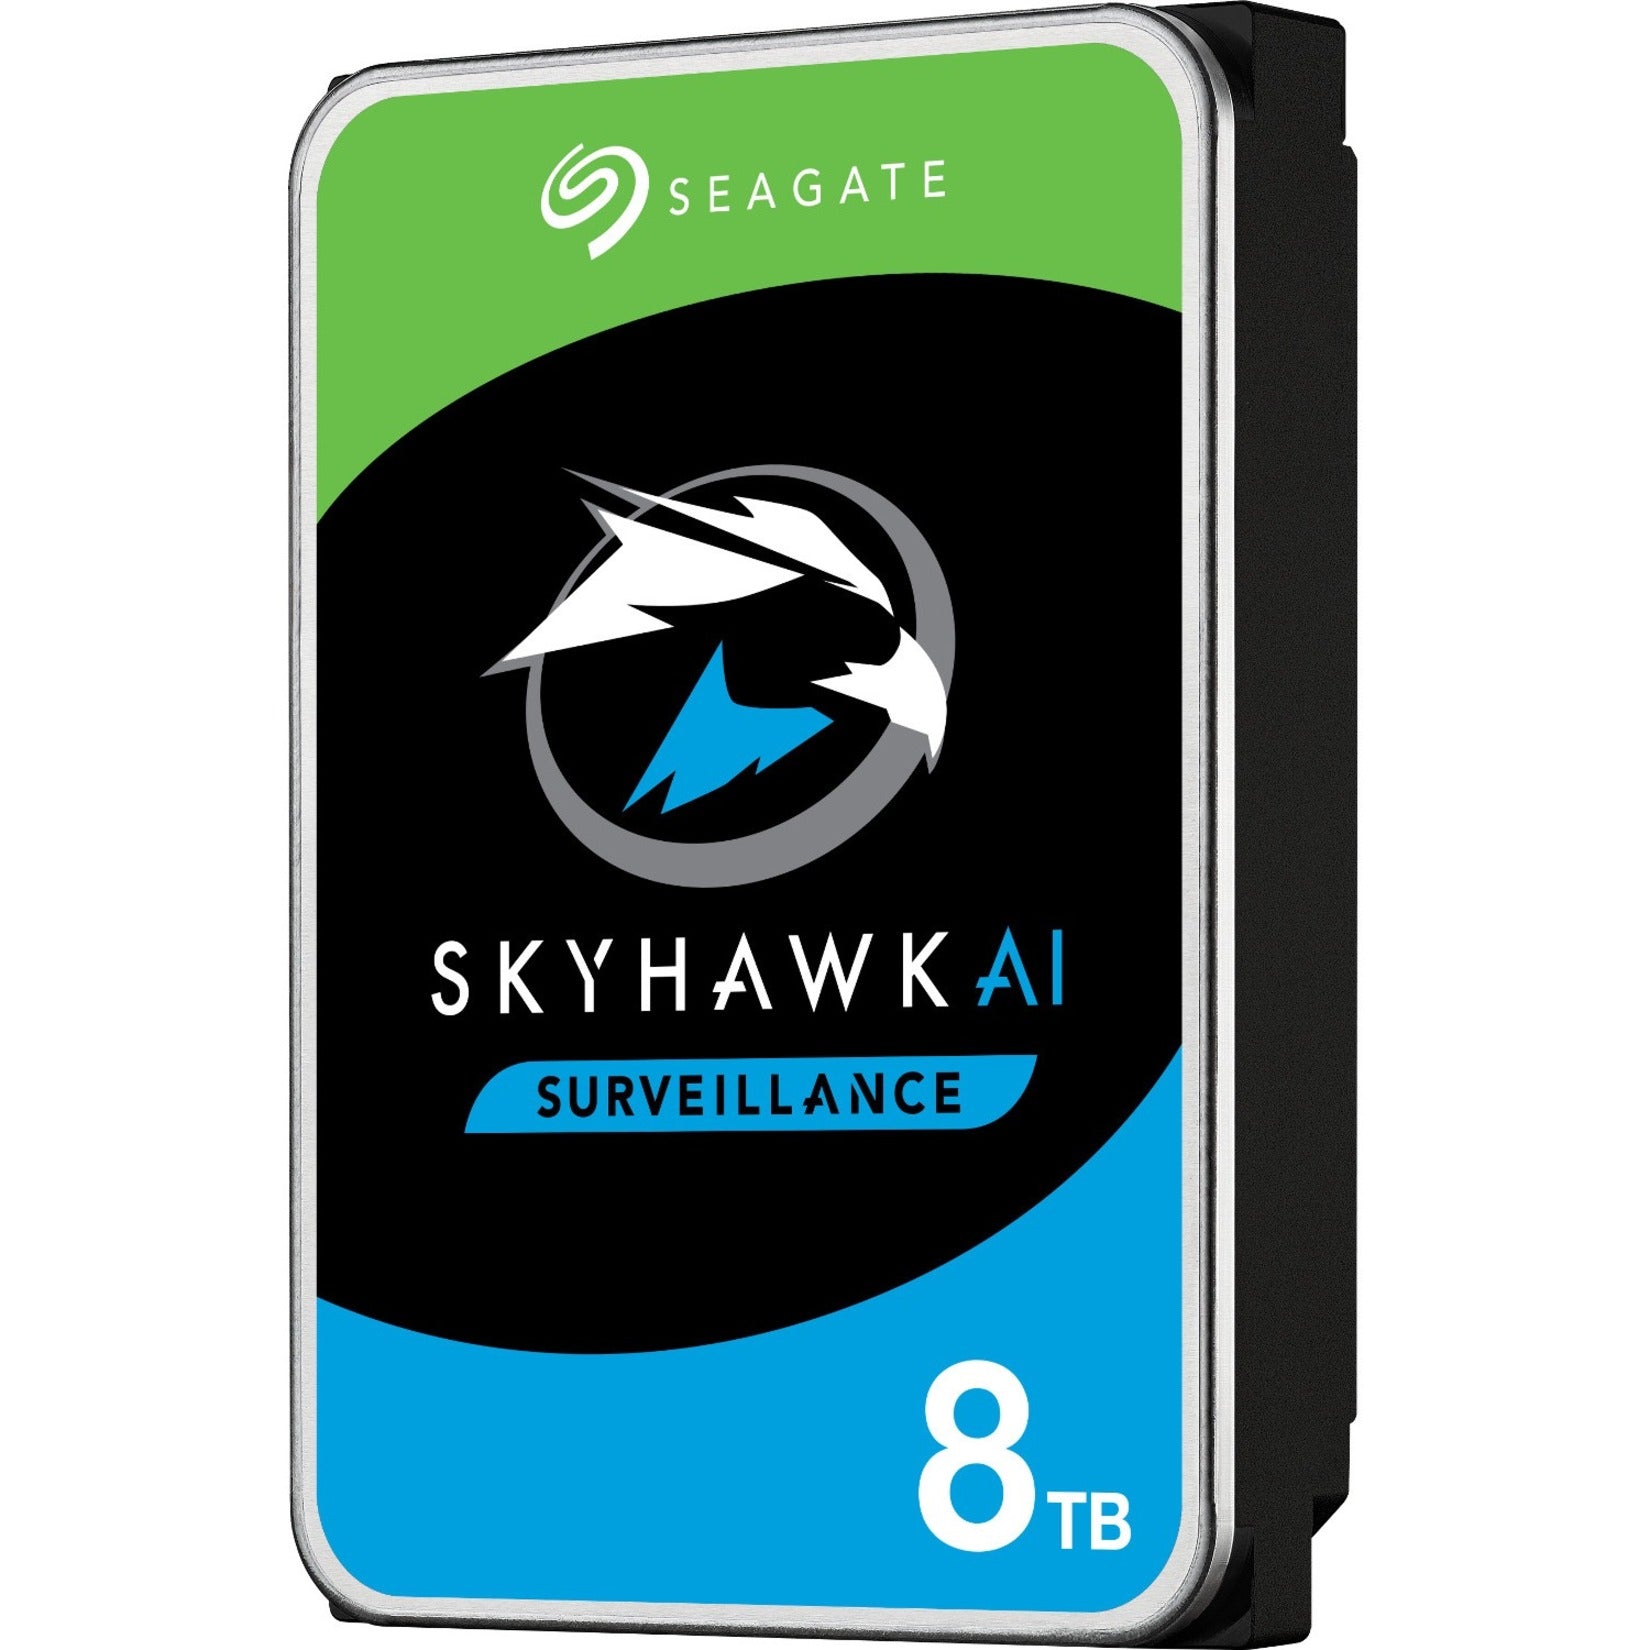 Seagate ST8000VE001 SkyHawk AI 8TB Disque Dur Stockage de Surveillance 24x7